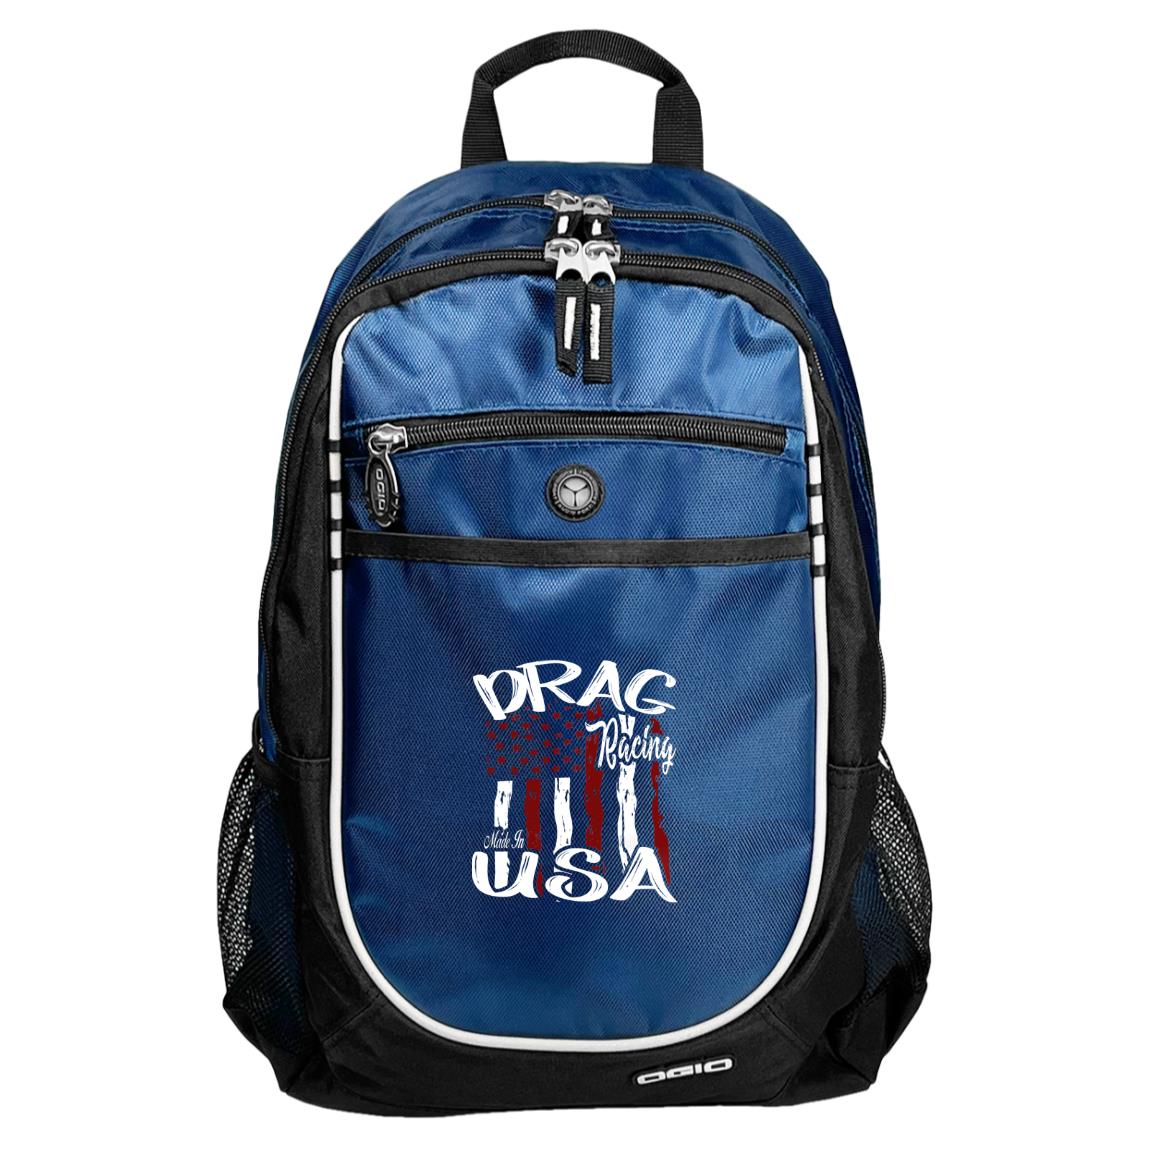 Drag Racing Made In USA Rugged Bookbag